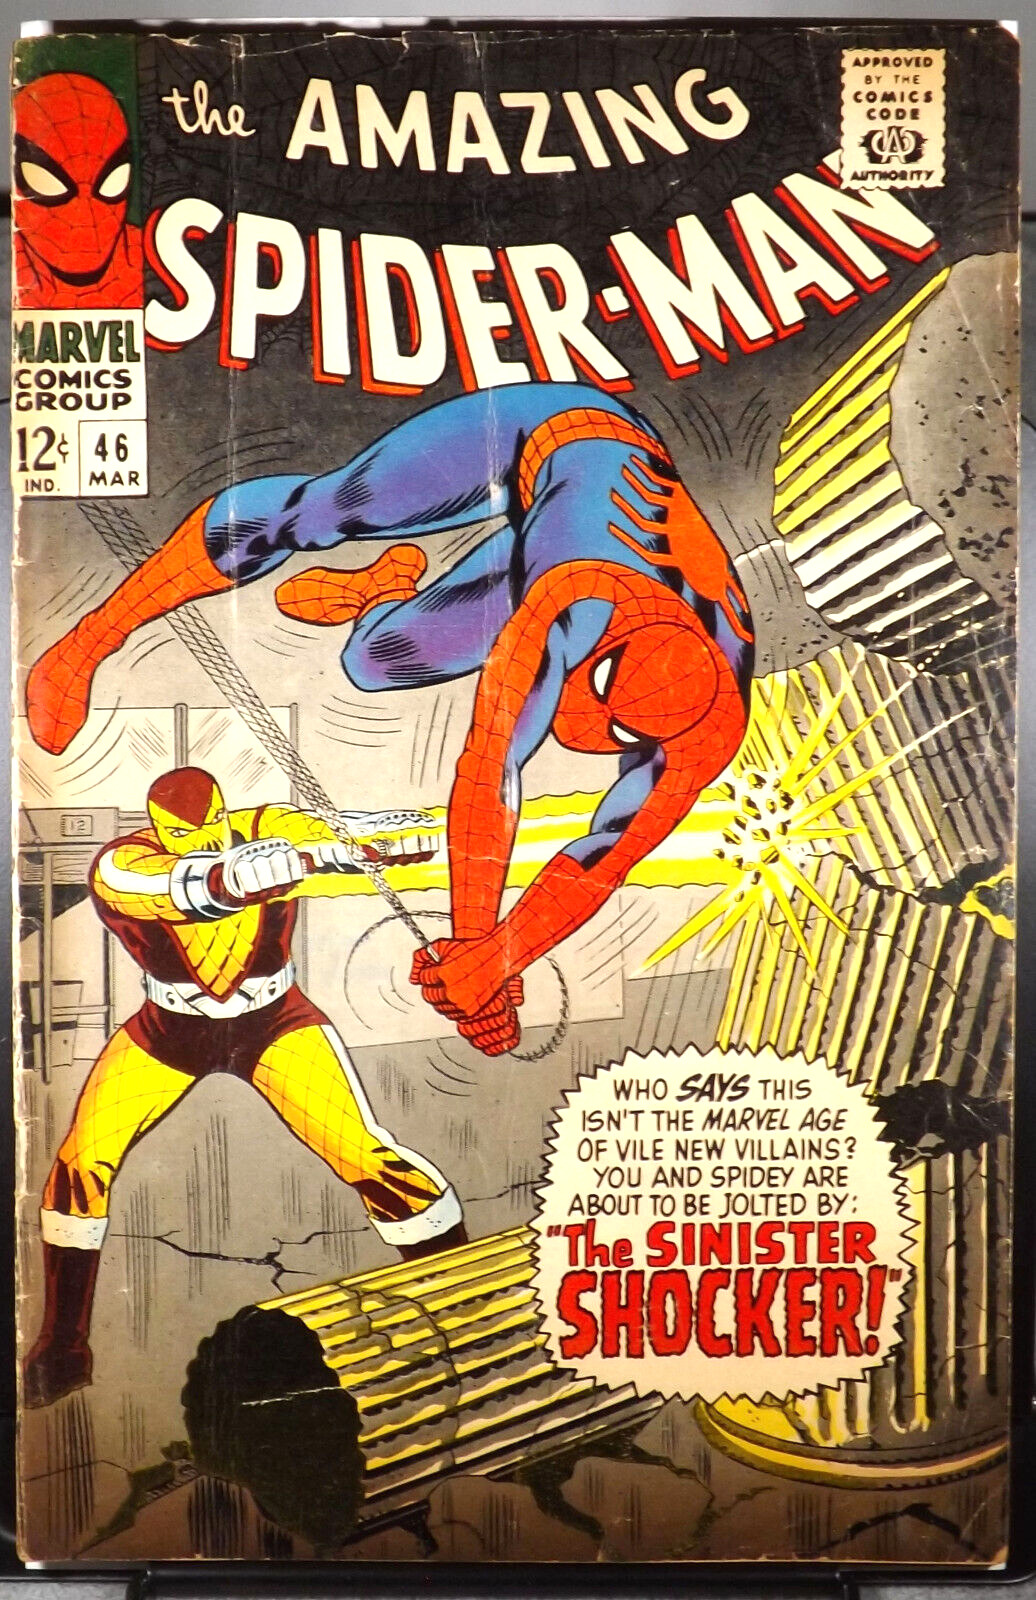 AMAZING SPIDER-MAN #46 VG+ 1st Appearance Shocker 1967 MCU Marvel Comics